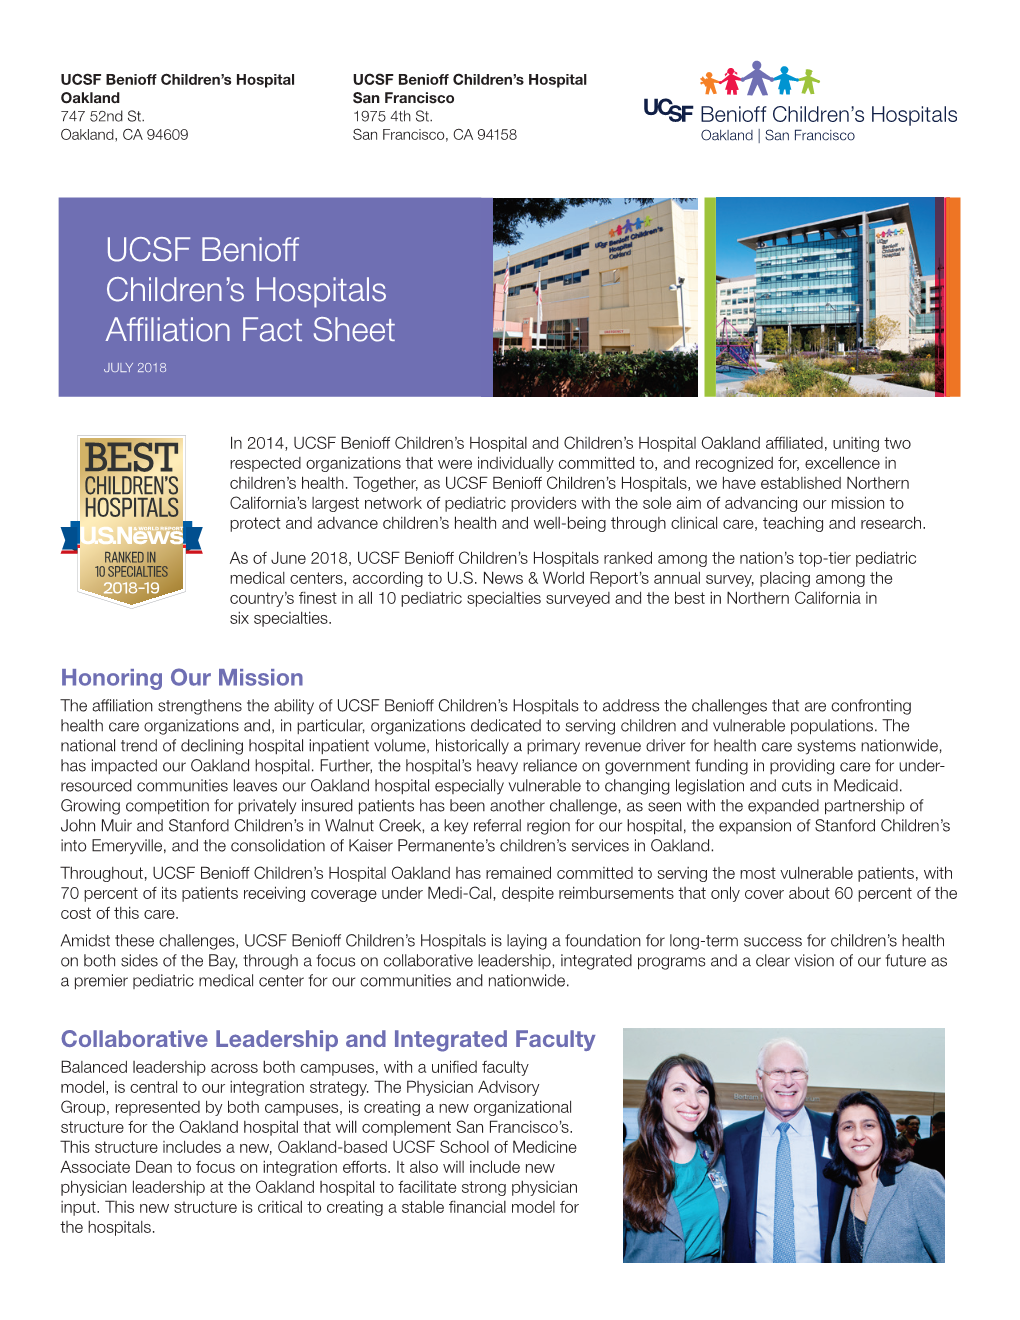 UCSF Benioff Children's Hospitals Affiliation Fact Sheet